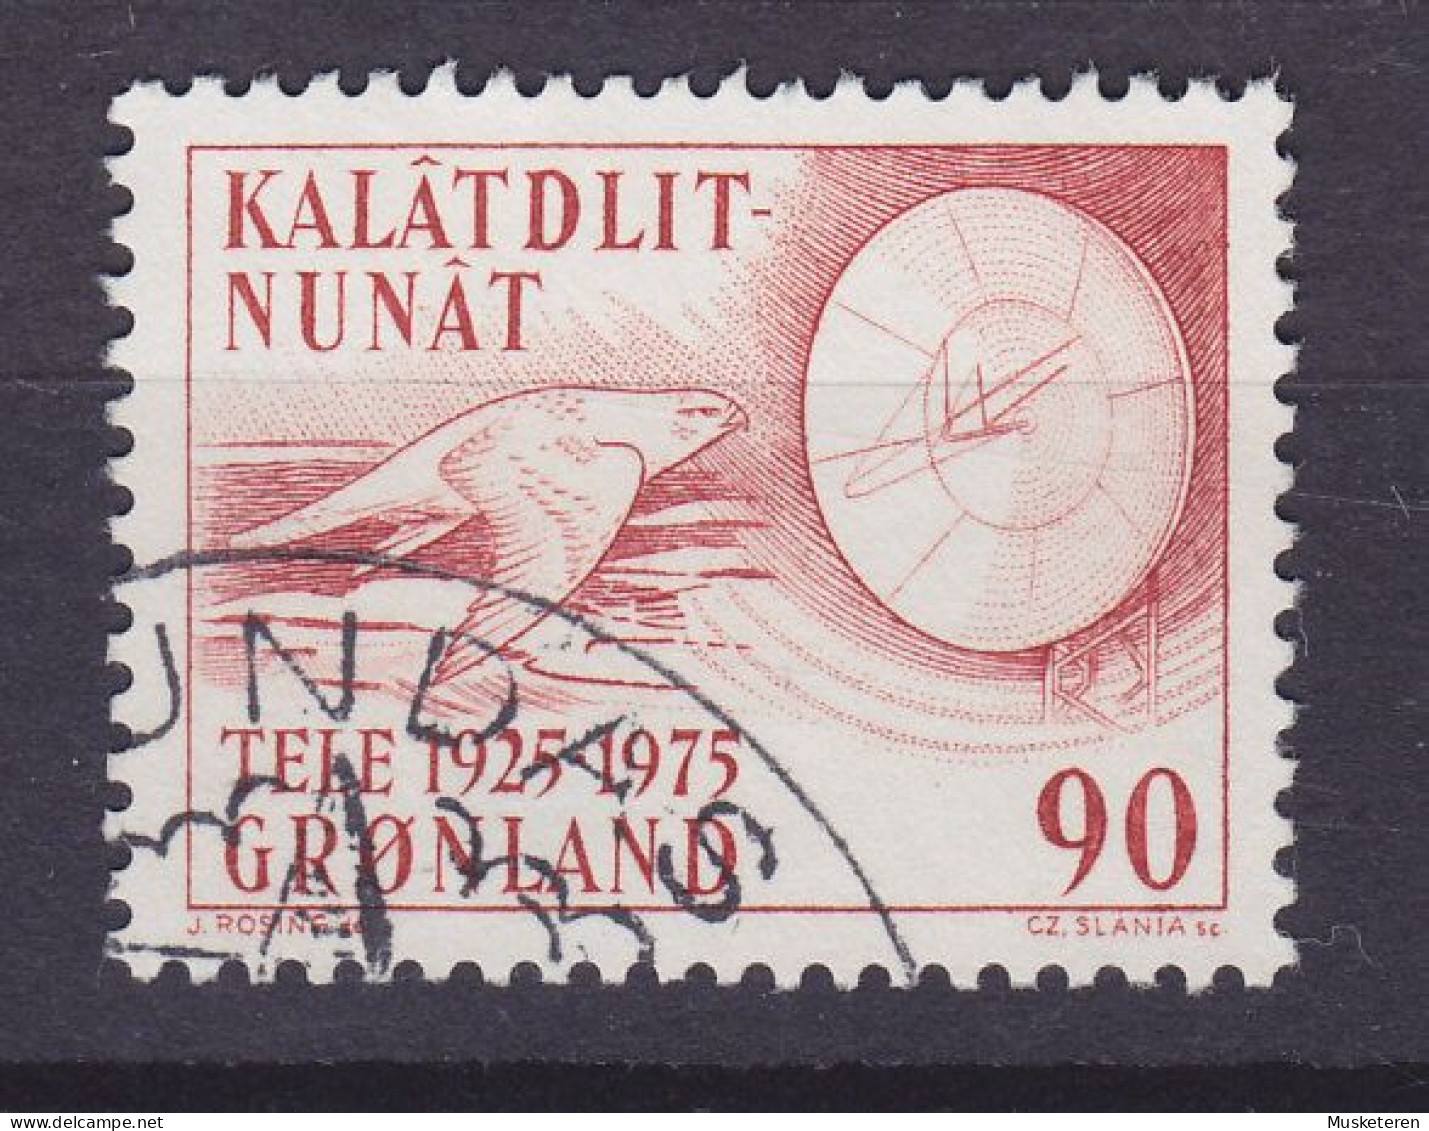 Greenland 1975 Mi. 94, 90 (Ø) Telekommunikation Bird Vogel Oiseau Gerfalke Parabolantenne (Cz. Slania) - Usados